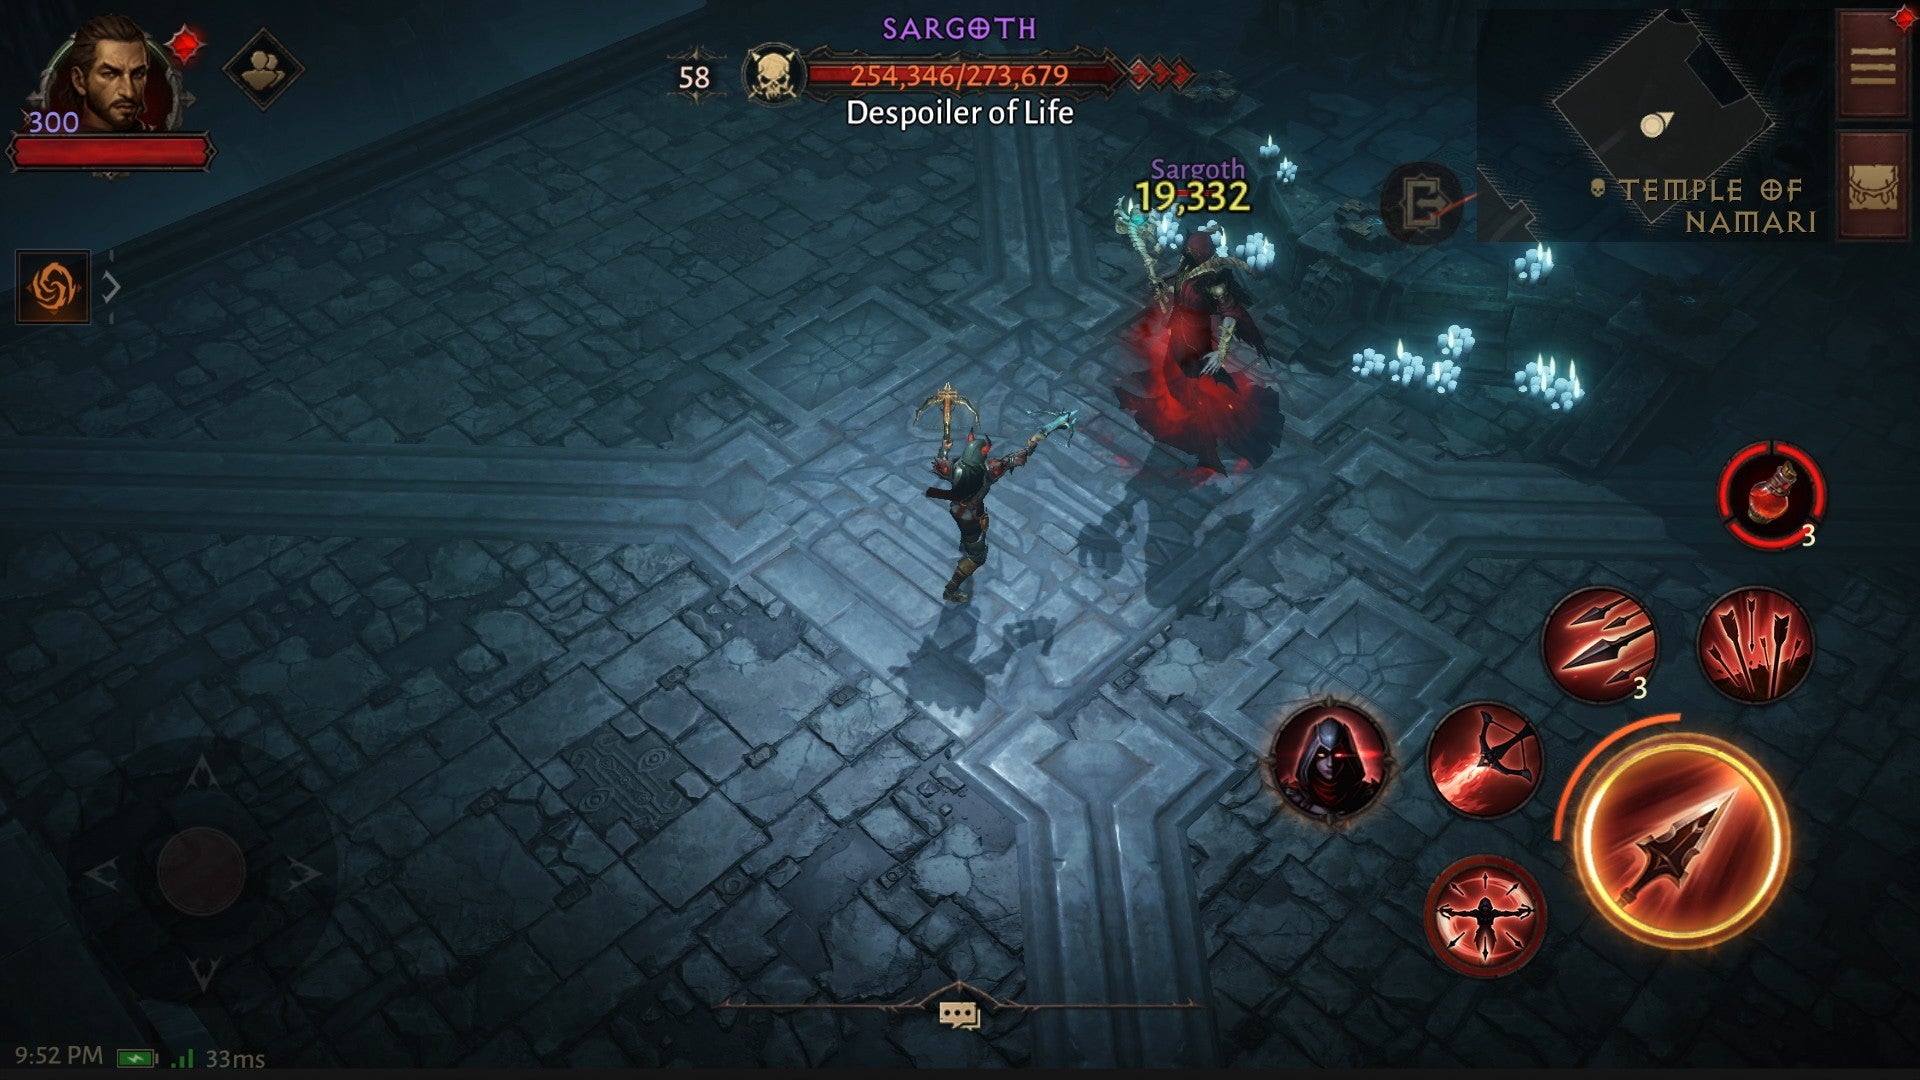 Diablo Immortal gameplay screenshot showing the Demon Hunter firing a bolt at a demonic boss named Sargoth, Despoiler of Life